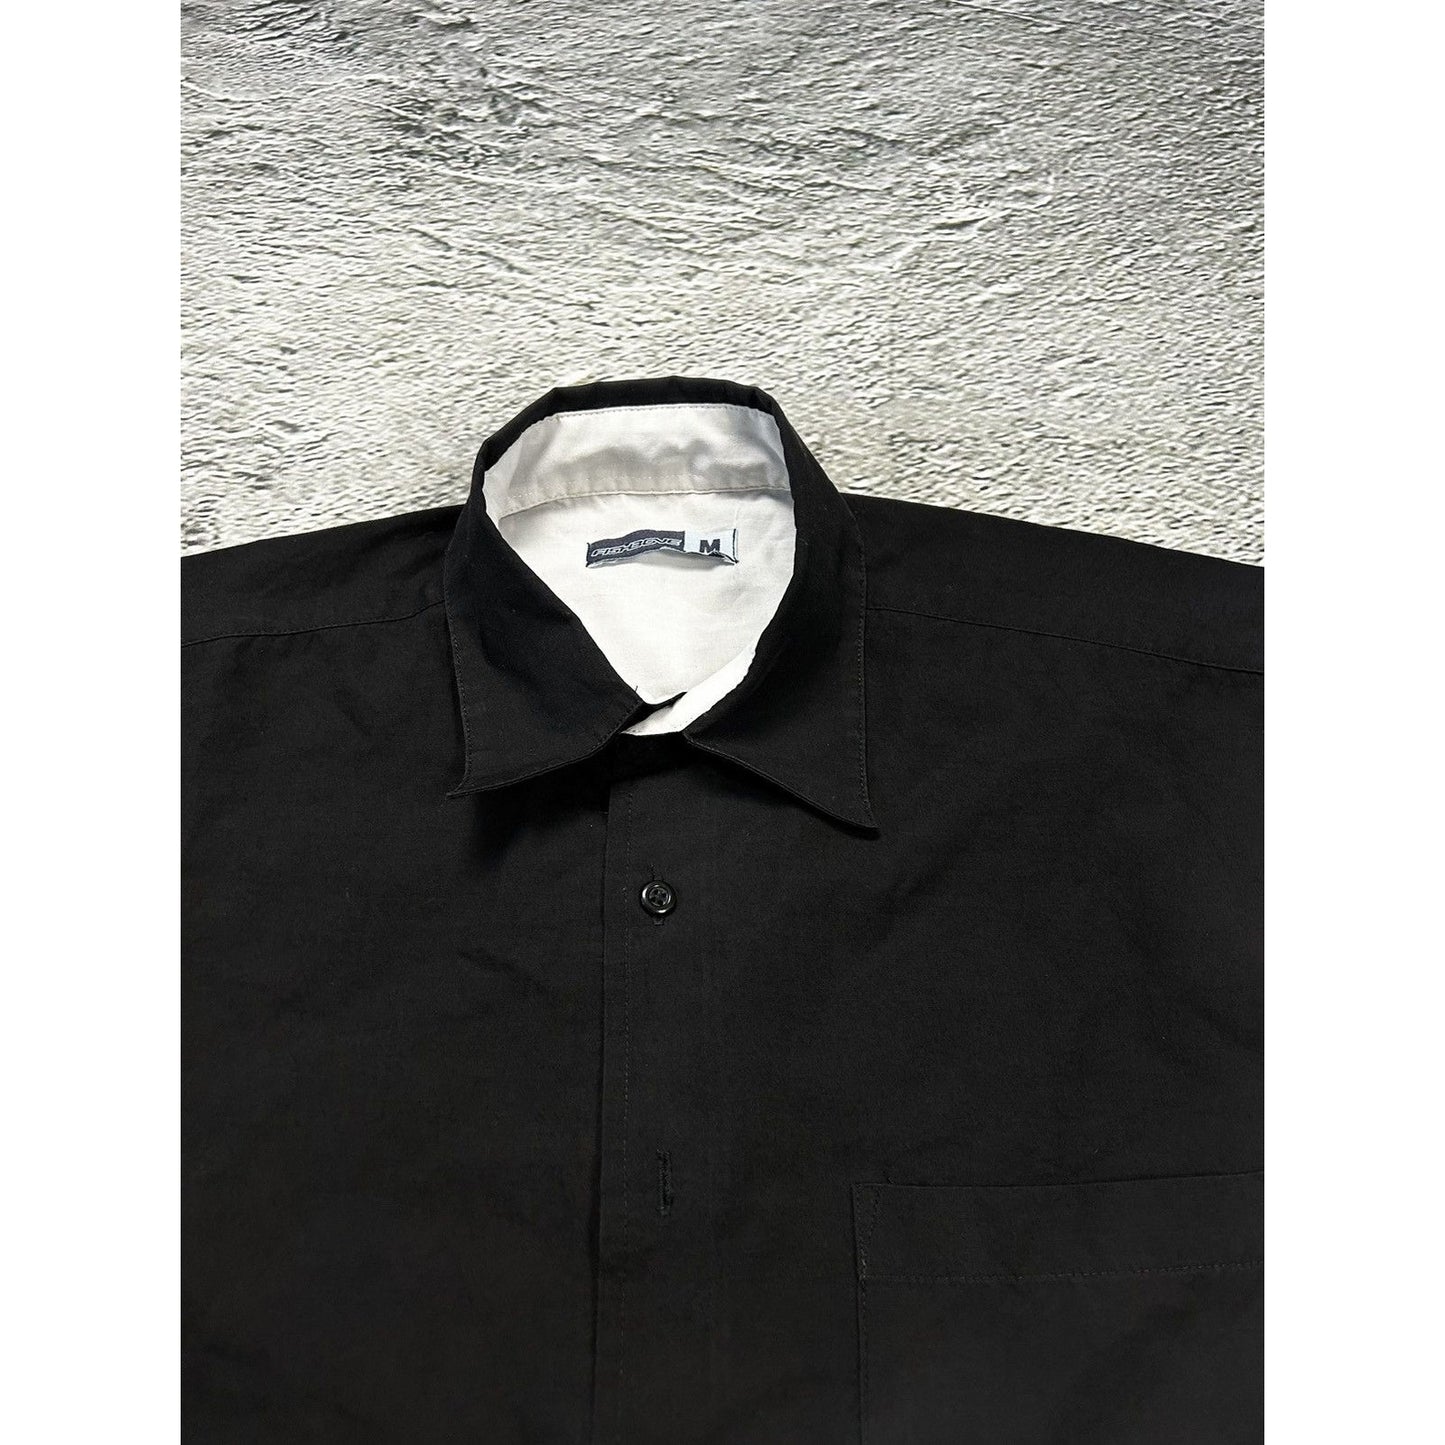 Fishbone Hawaiian Shirt black tribal vintage Y2K